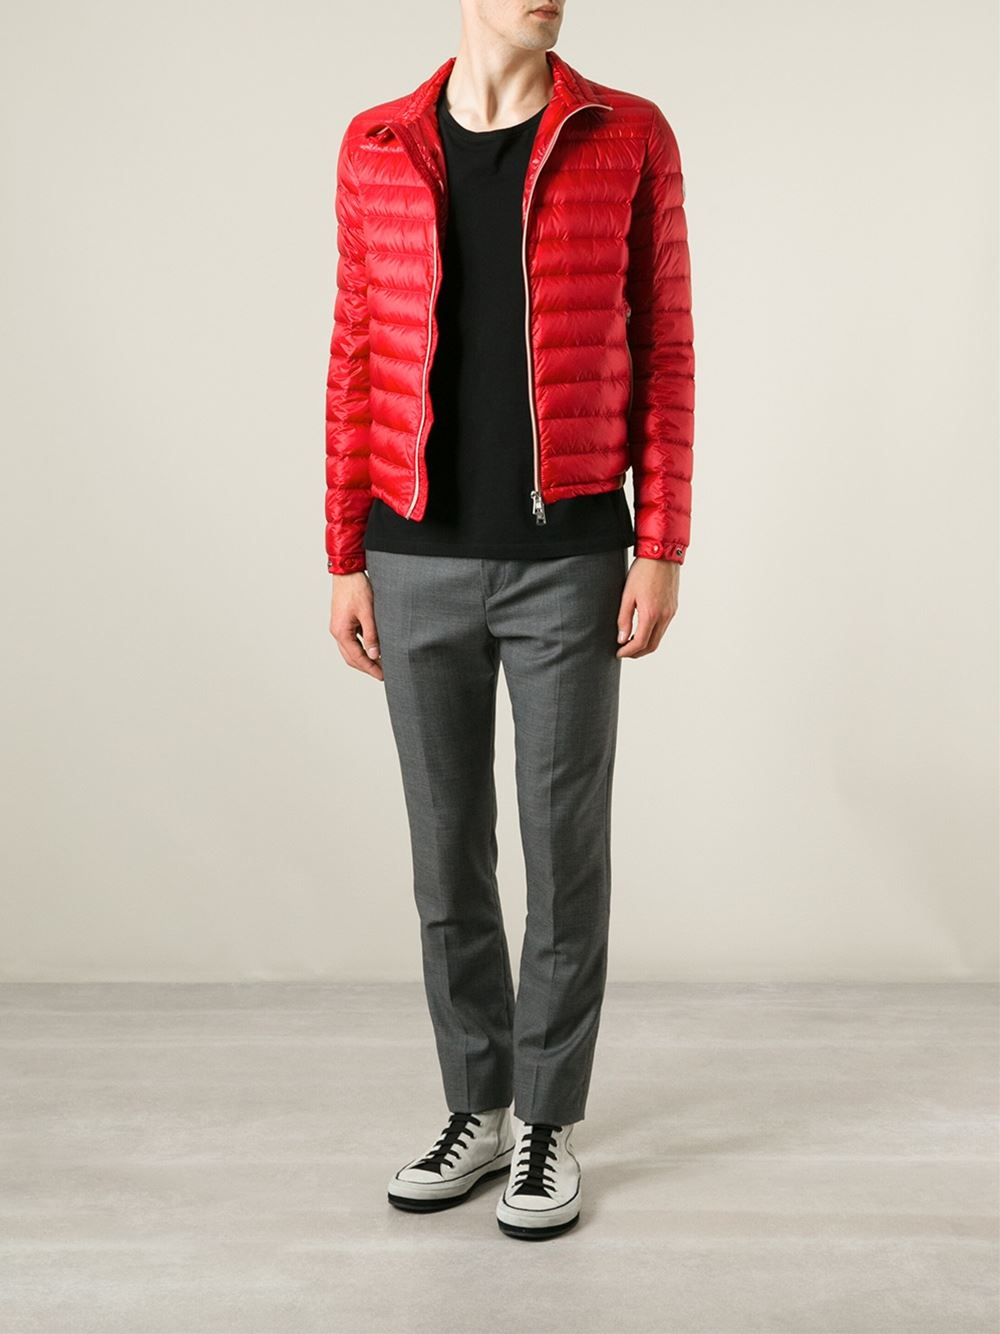 moncler daniel jacket red|OFF 72%,powerkablo.com.tr